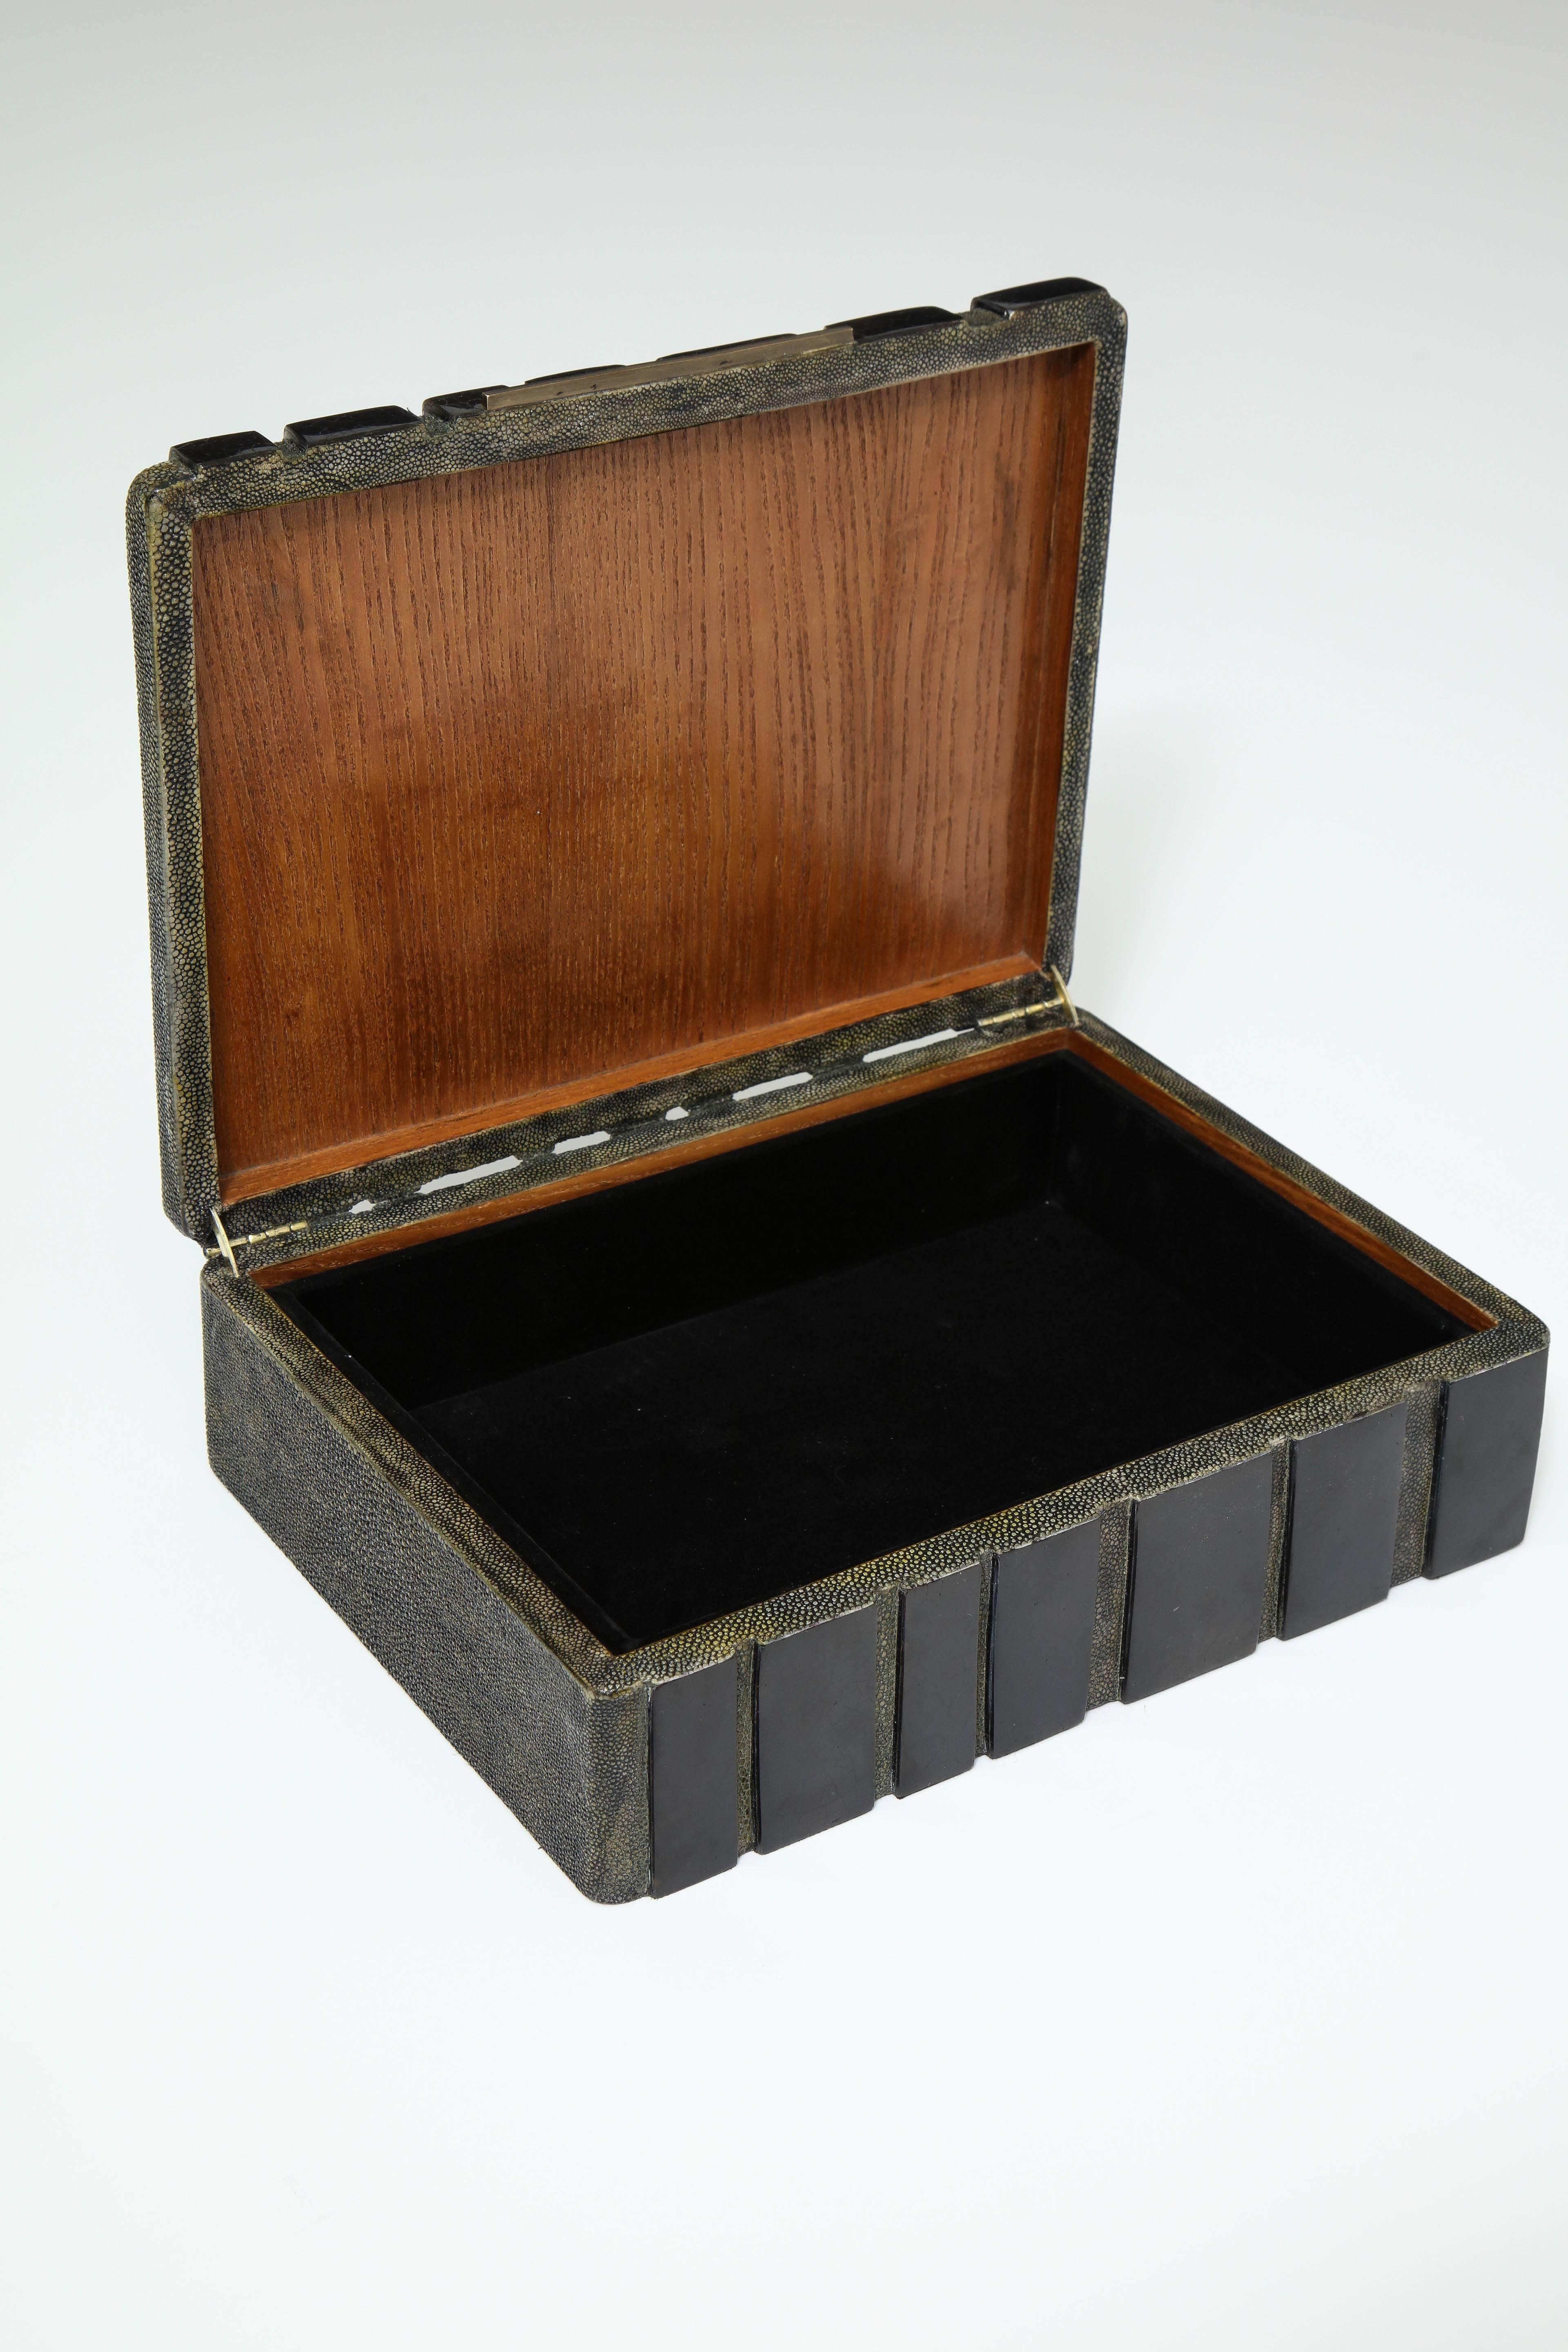 Art Deco Shagreen Decorative Box, Black Shagreen and Palm Wood Details